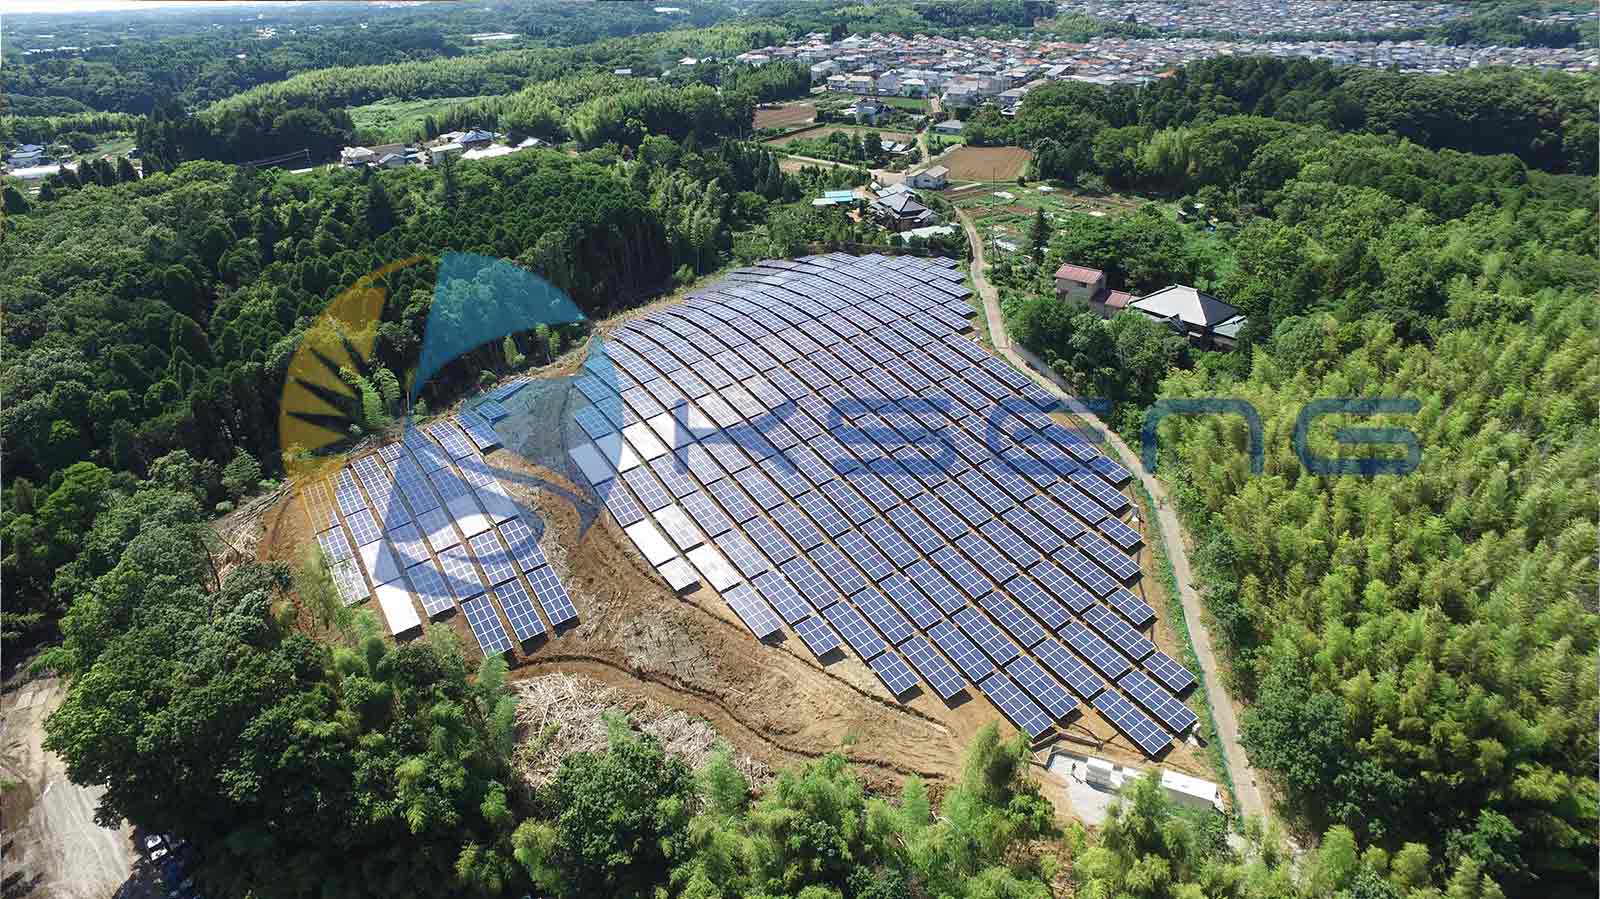  Chiba-ken sistema de montaje en suelo de panel solar 1MW 